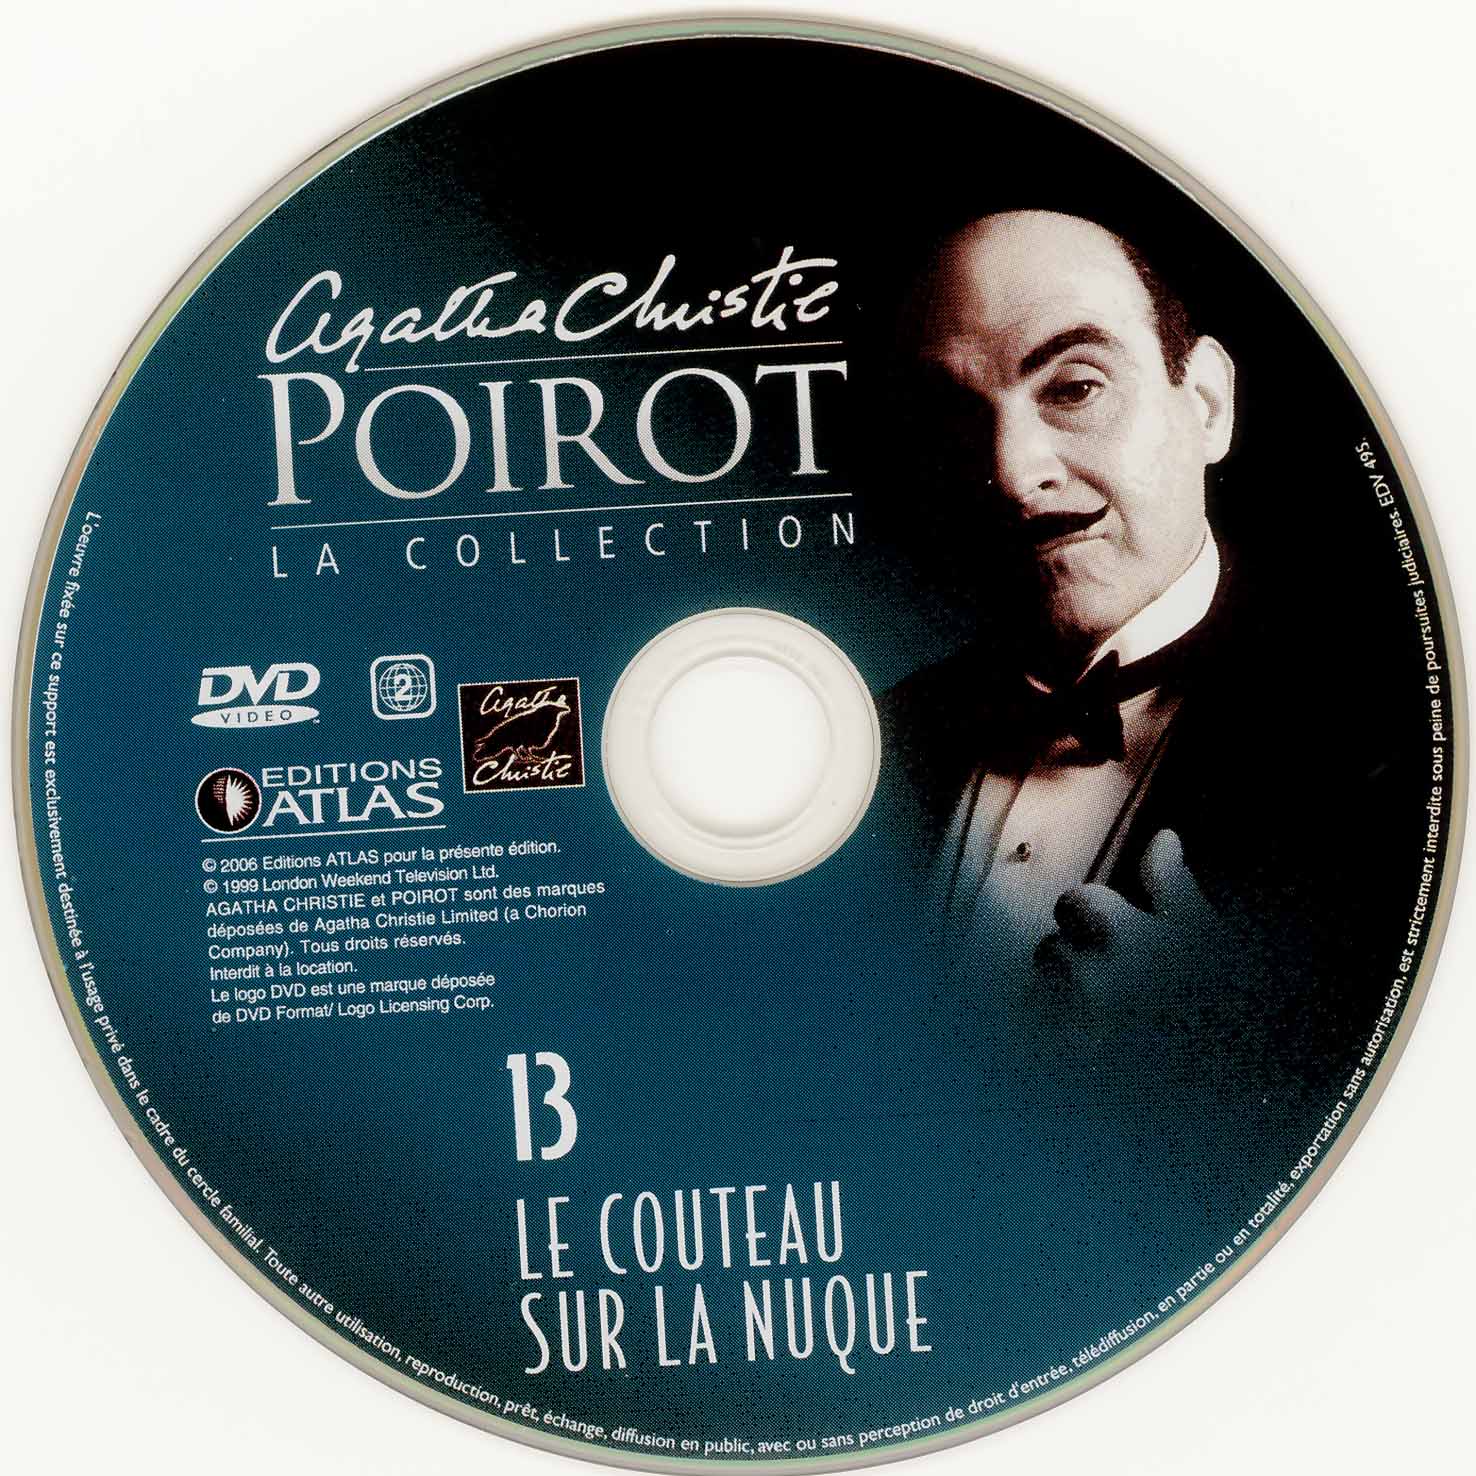 Hercule Poirot vol 13